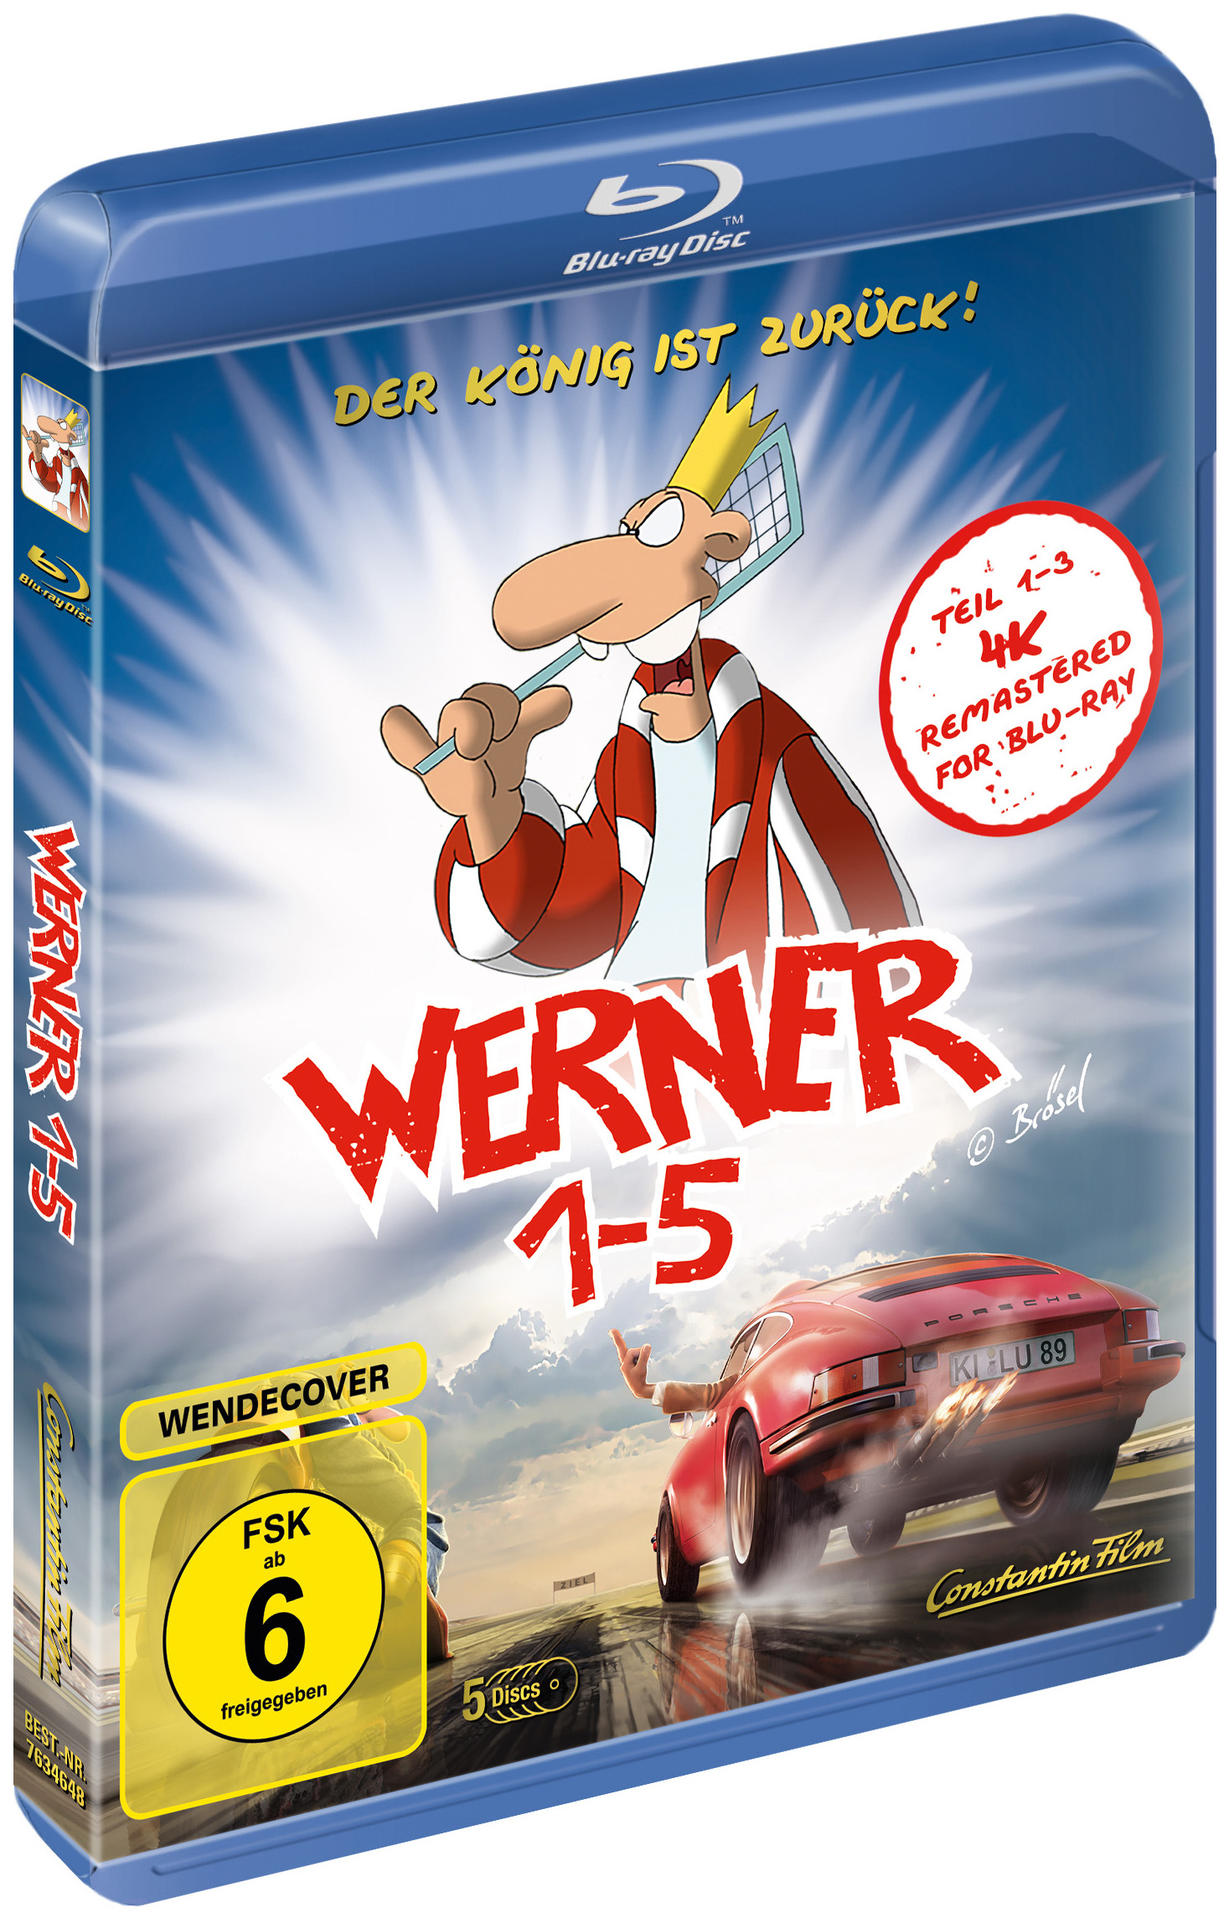 Werner 1-5 Königbox Blu-ray